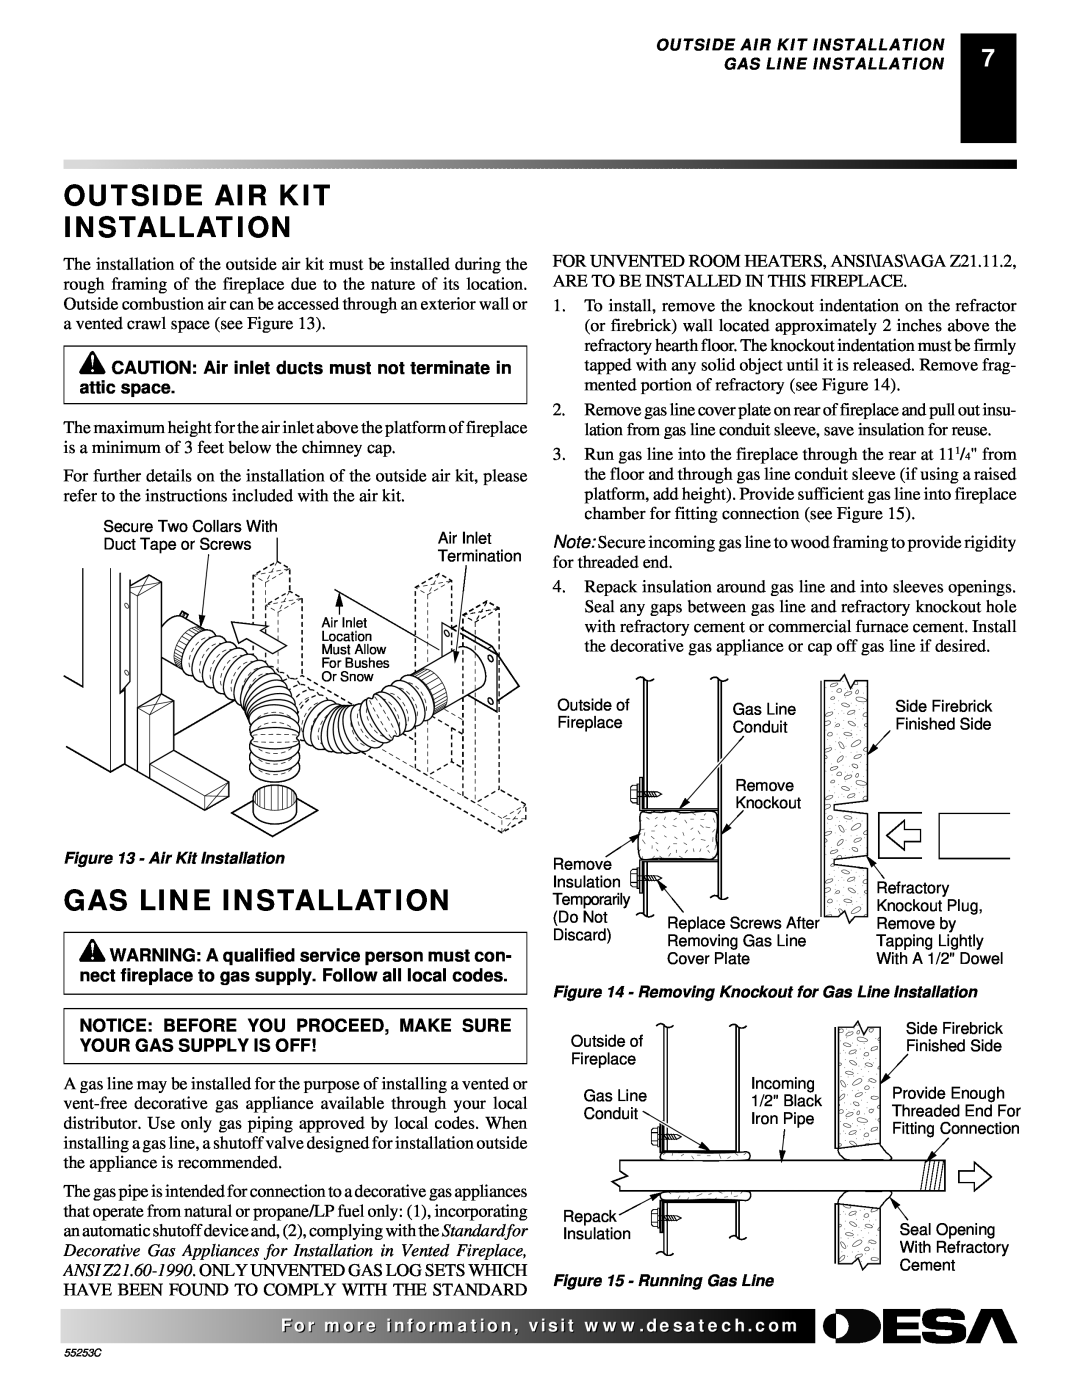 Desa V3610ST manual Outside Air Kit Installation, Gas Line Installation 